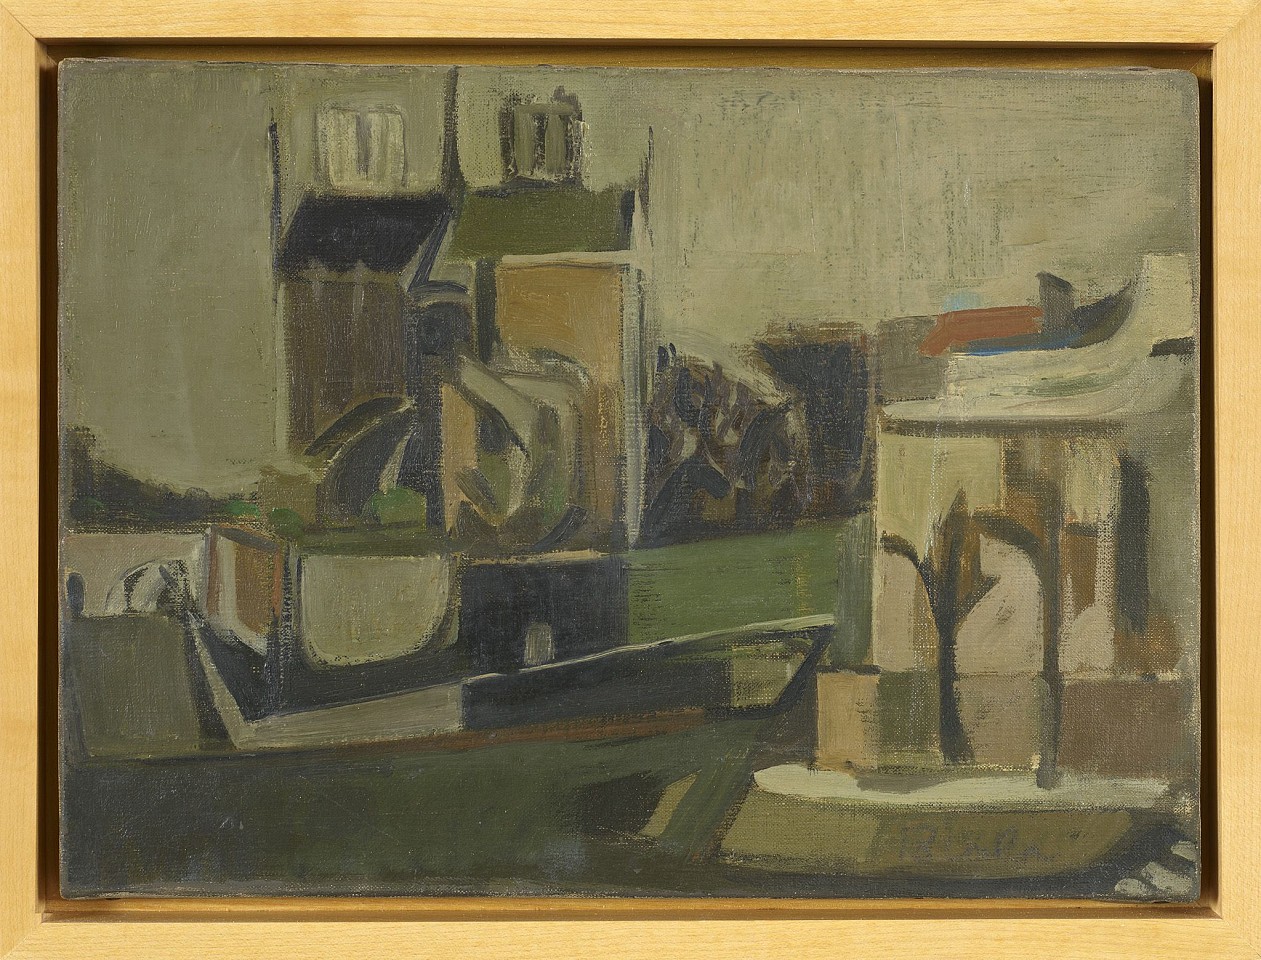 Janice Biala, Chevet de Notre Dame, 1949
Oil on canvas, 9 1/2 x 11 in. (24.1 x 27.9 cm)
BIAL-00036